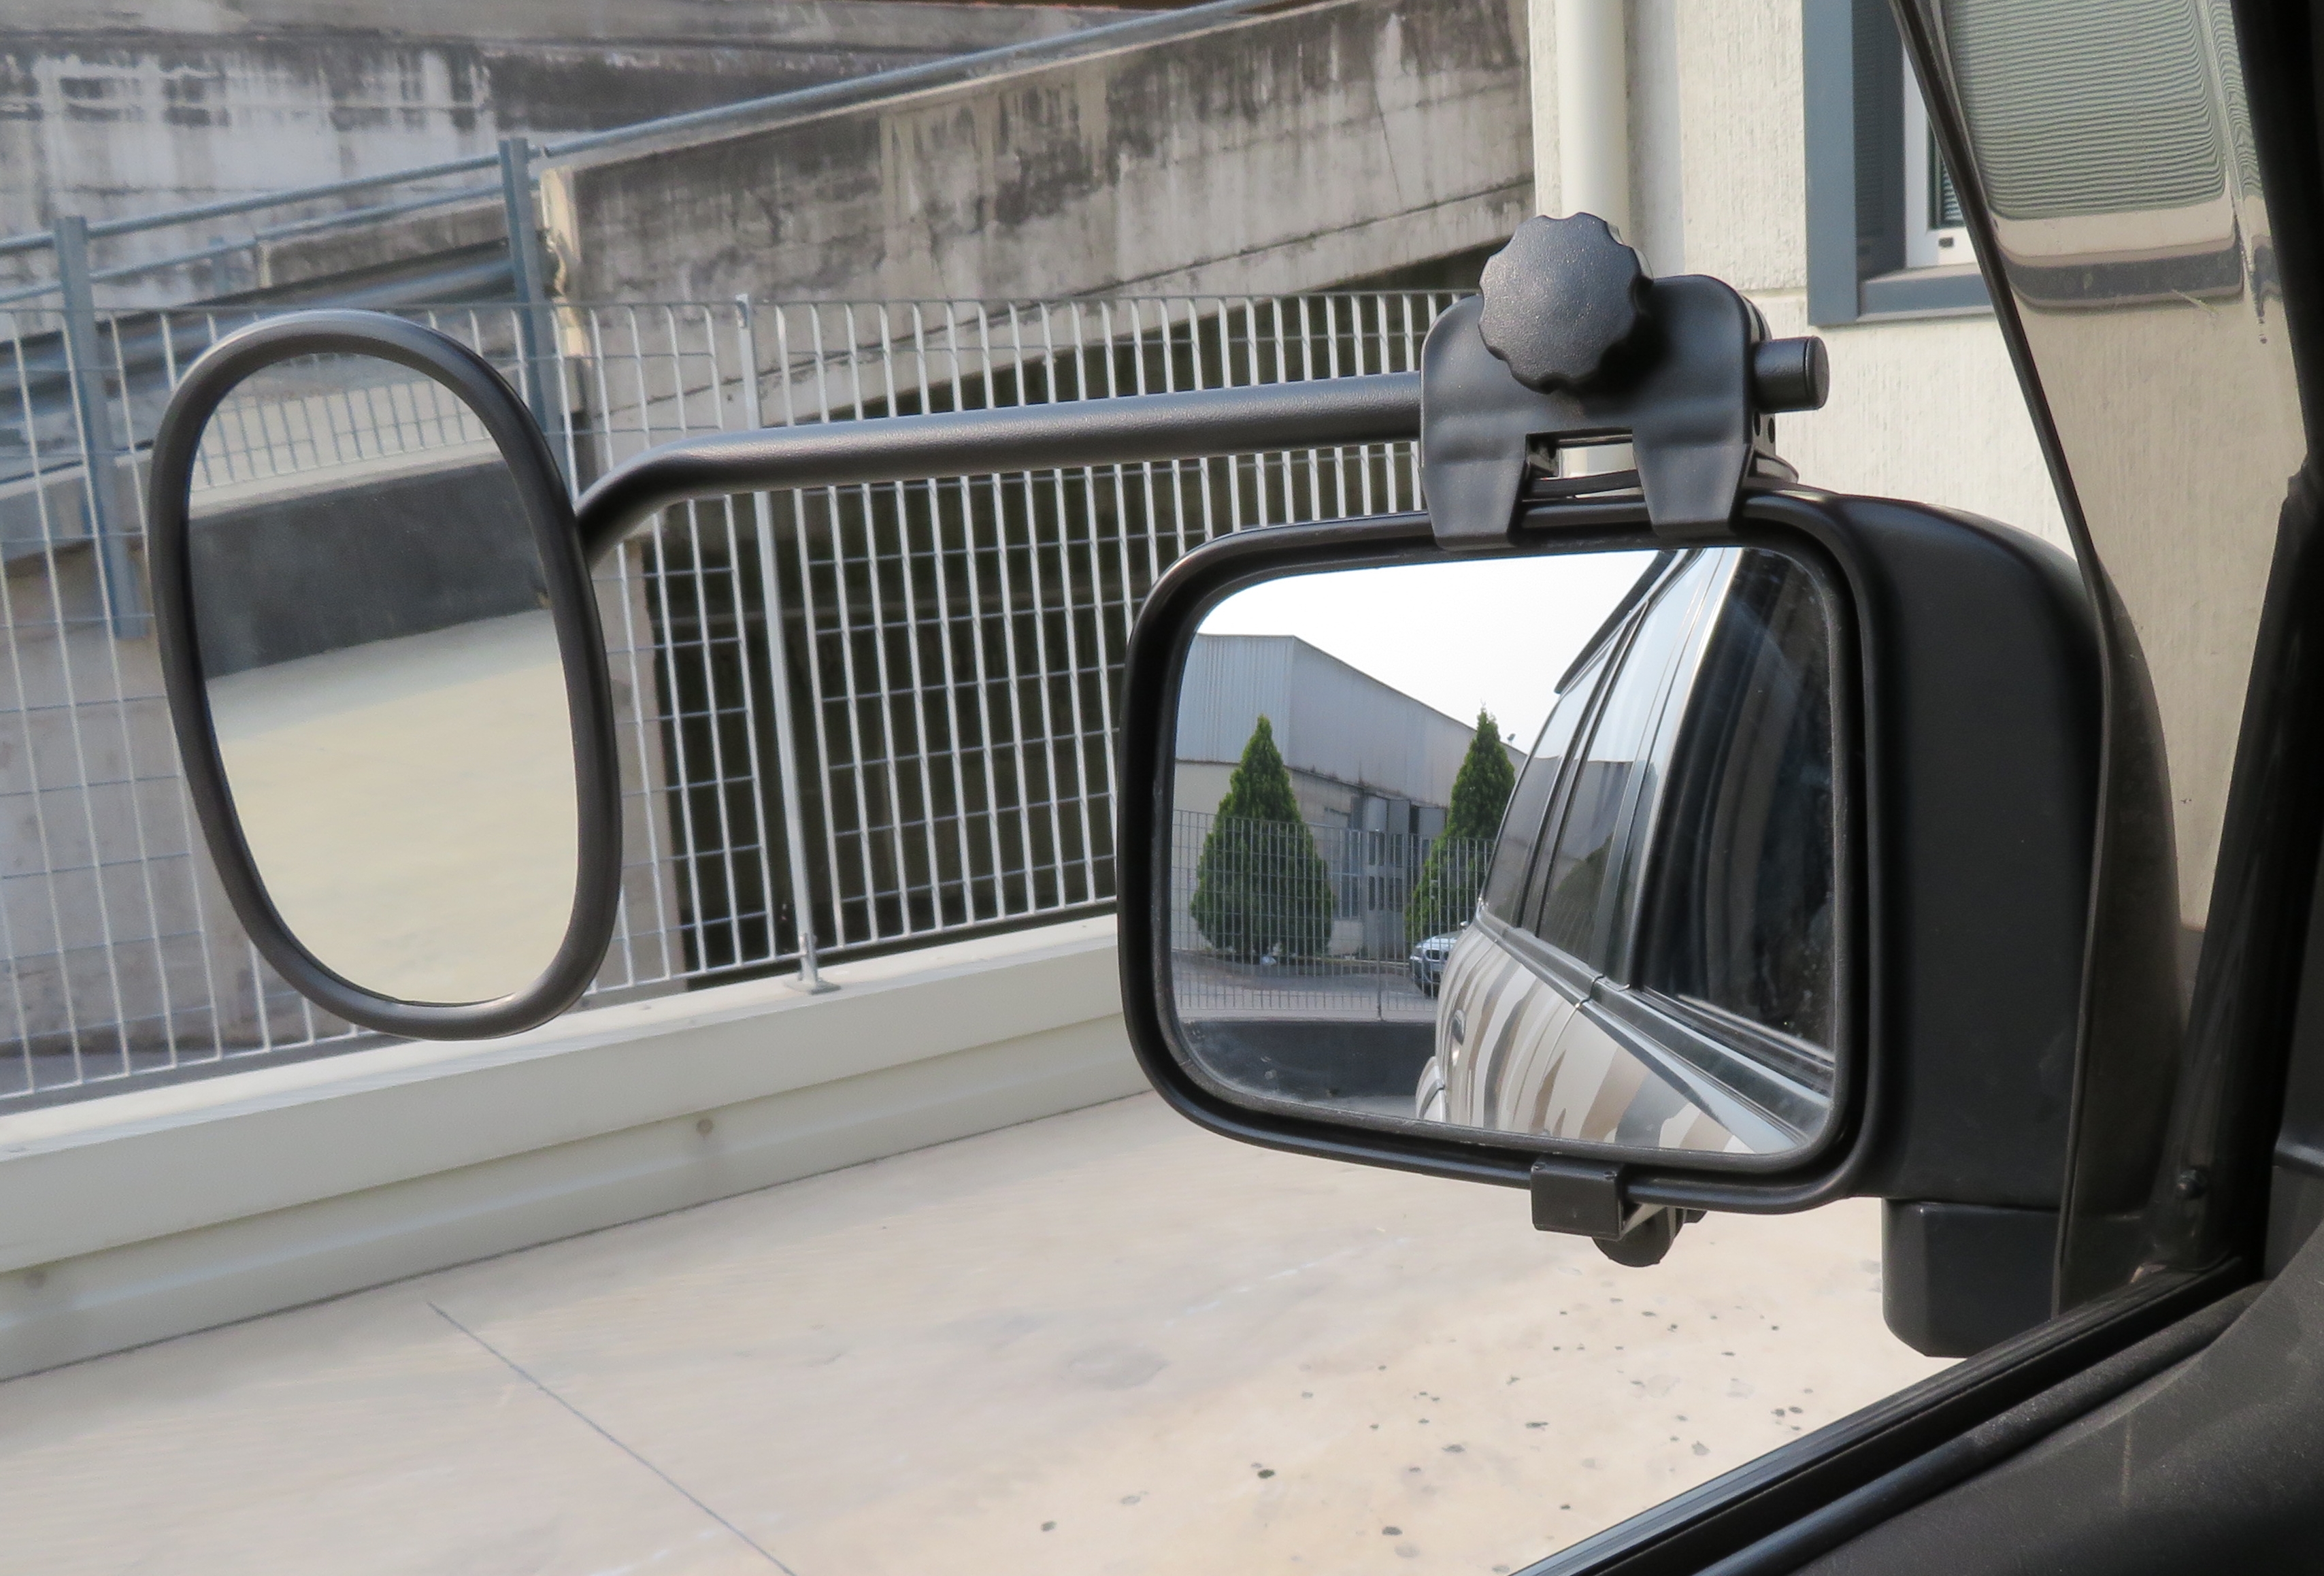 Specchio retrovisore per auto Delta Ang. Brunner - Pons Camper e Caravan